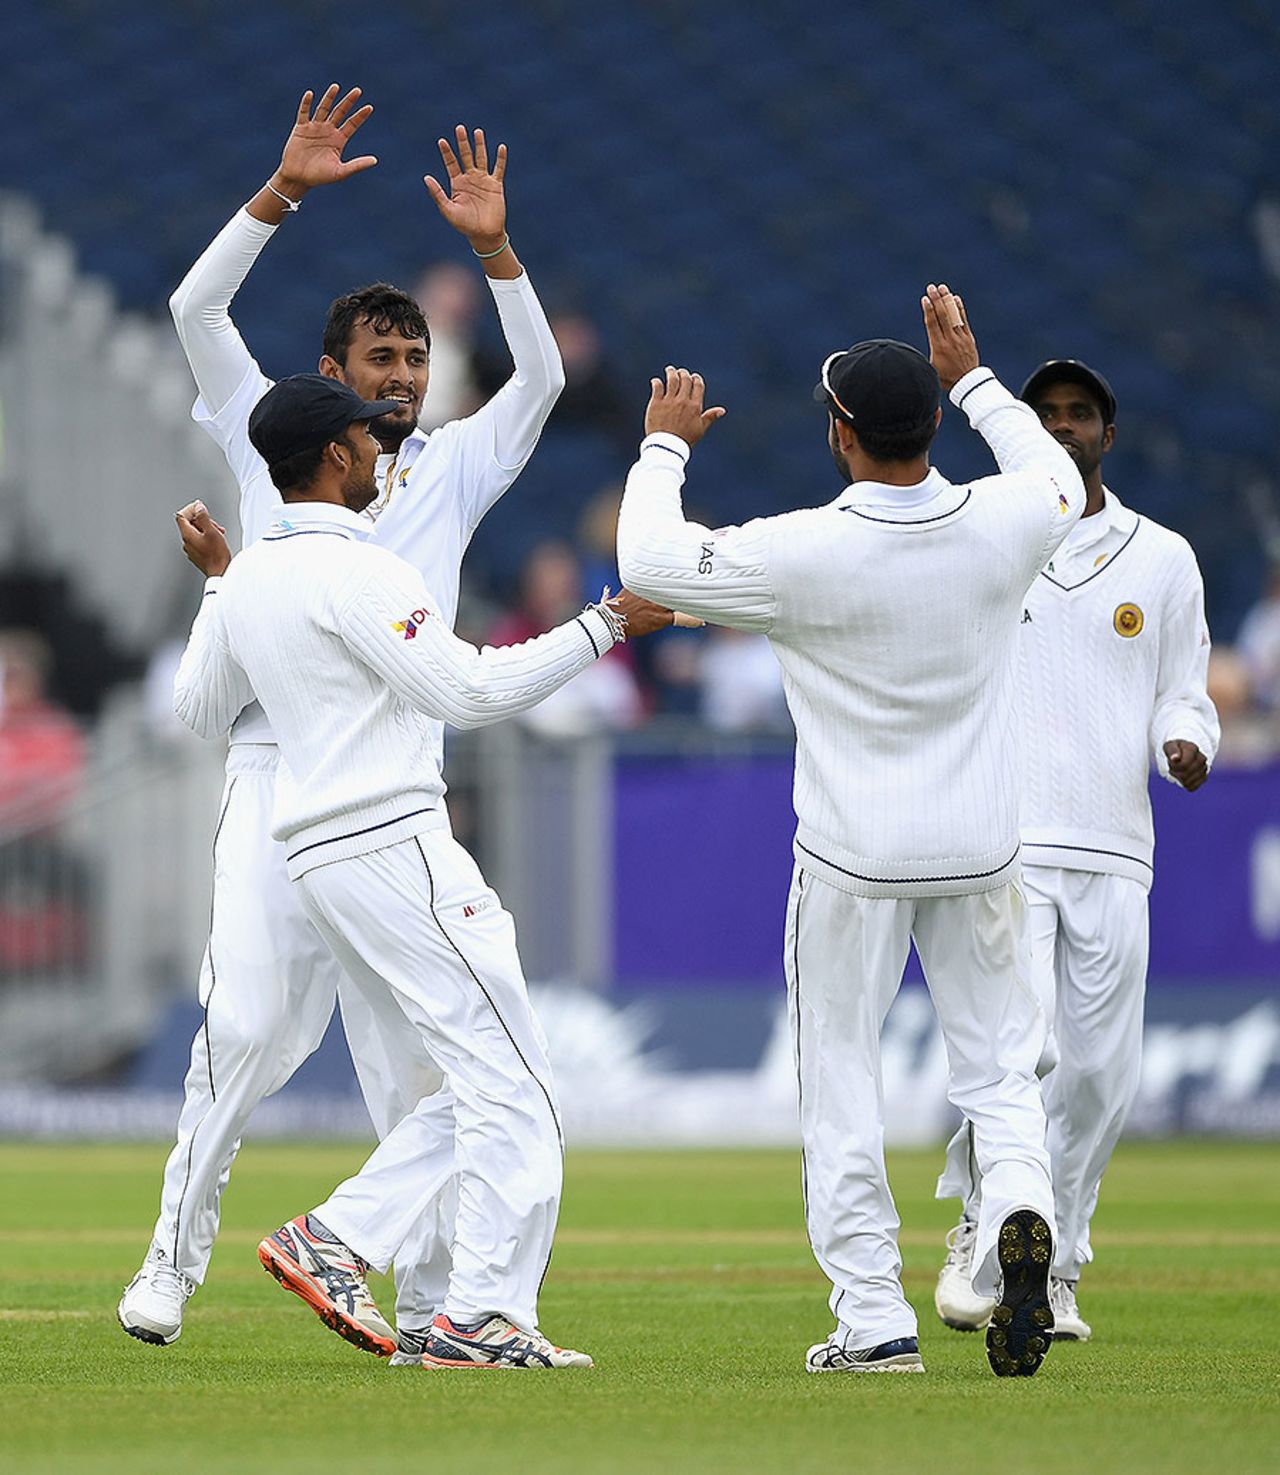 Suranga Lakmal celebrates the dismissal of Alastair Cook, England v Sri Lanka, 2nd Test, Chester-le-Street, 1st day, May 27, 2016